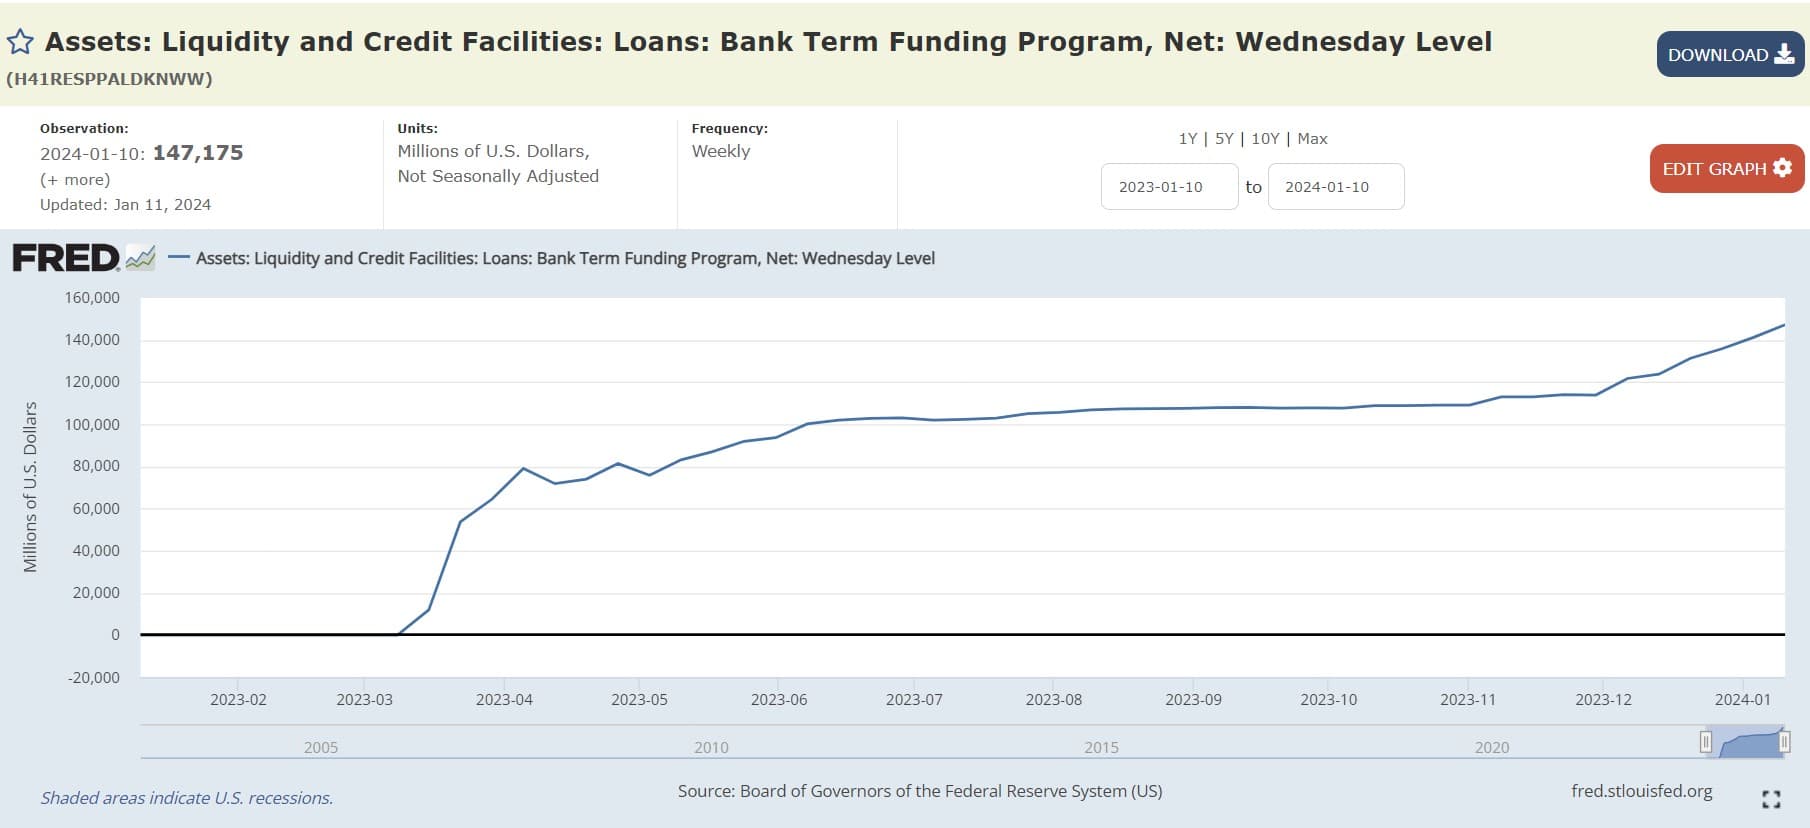 Liquidity and Credit Facilities: Loans: Bank Term Funding Program